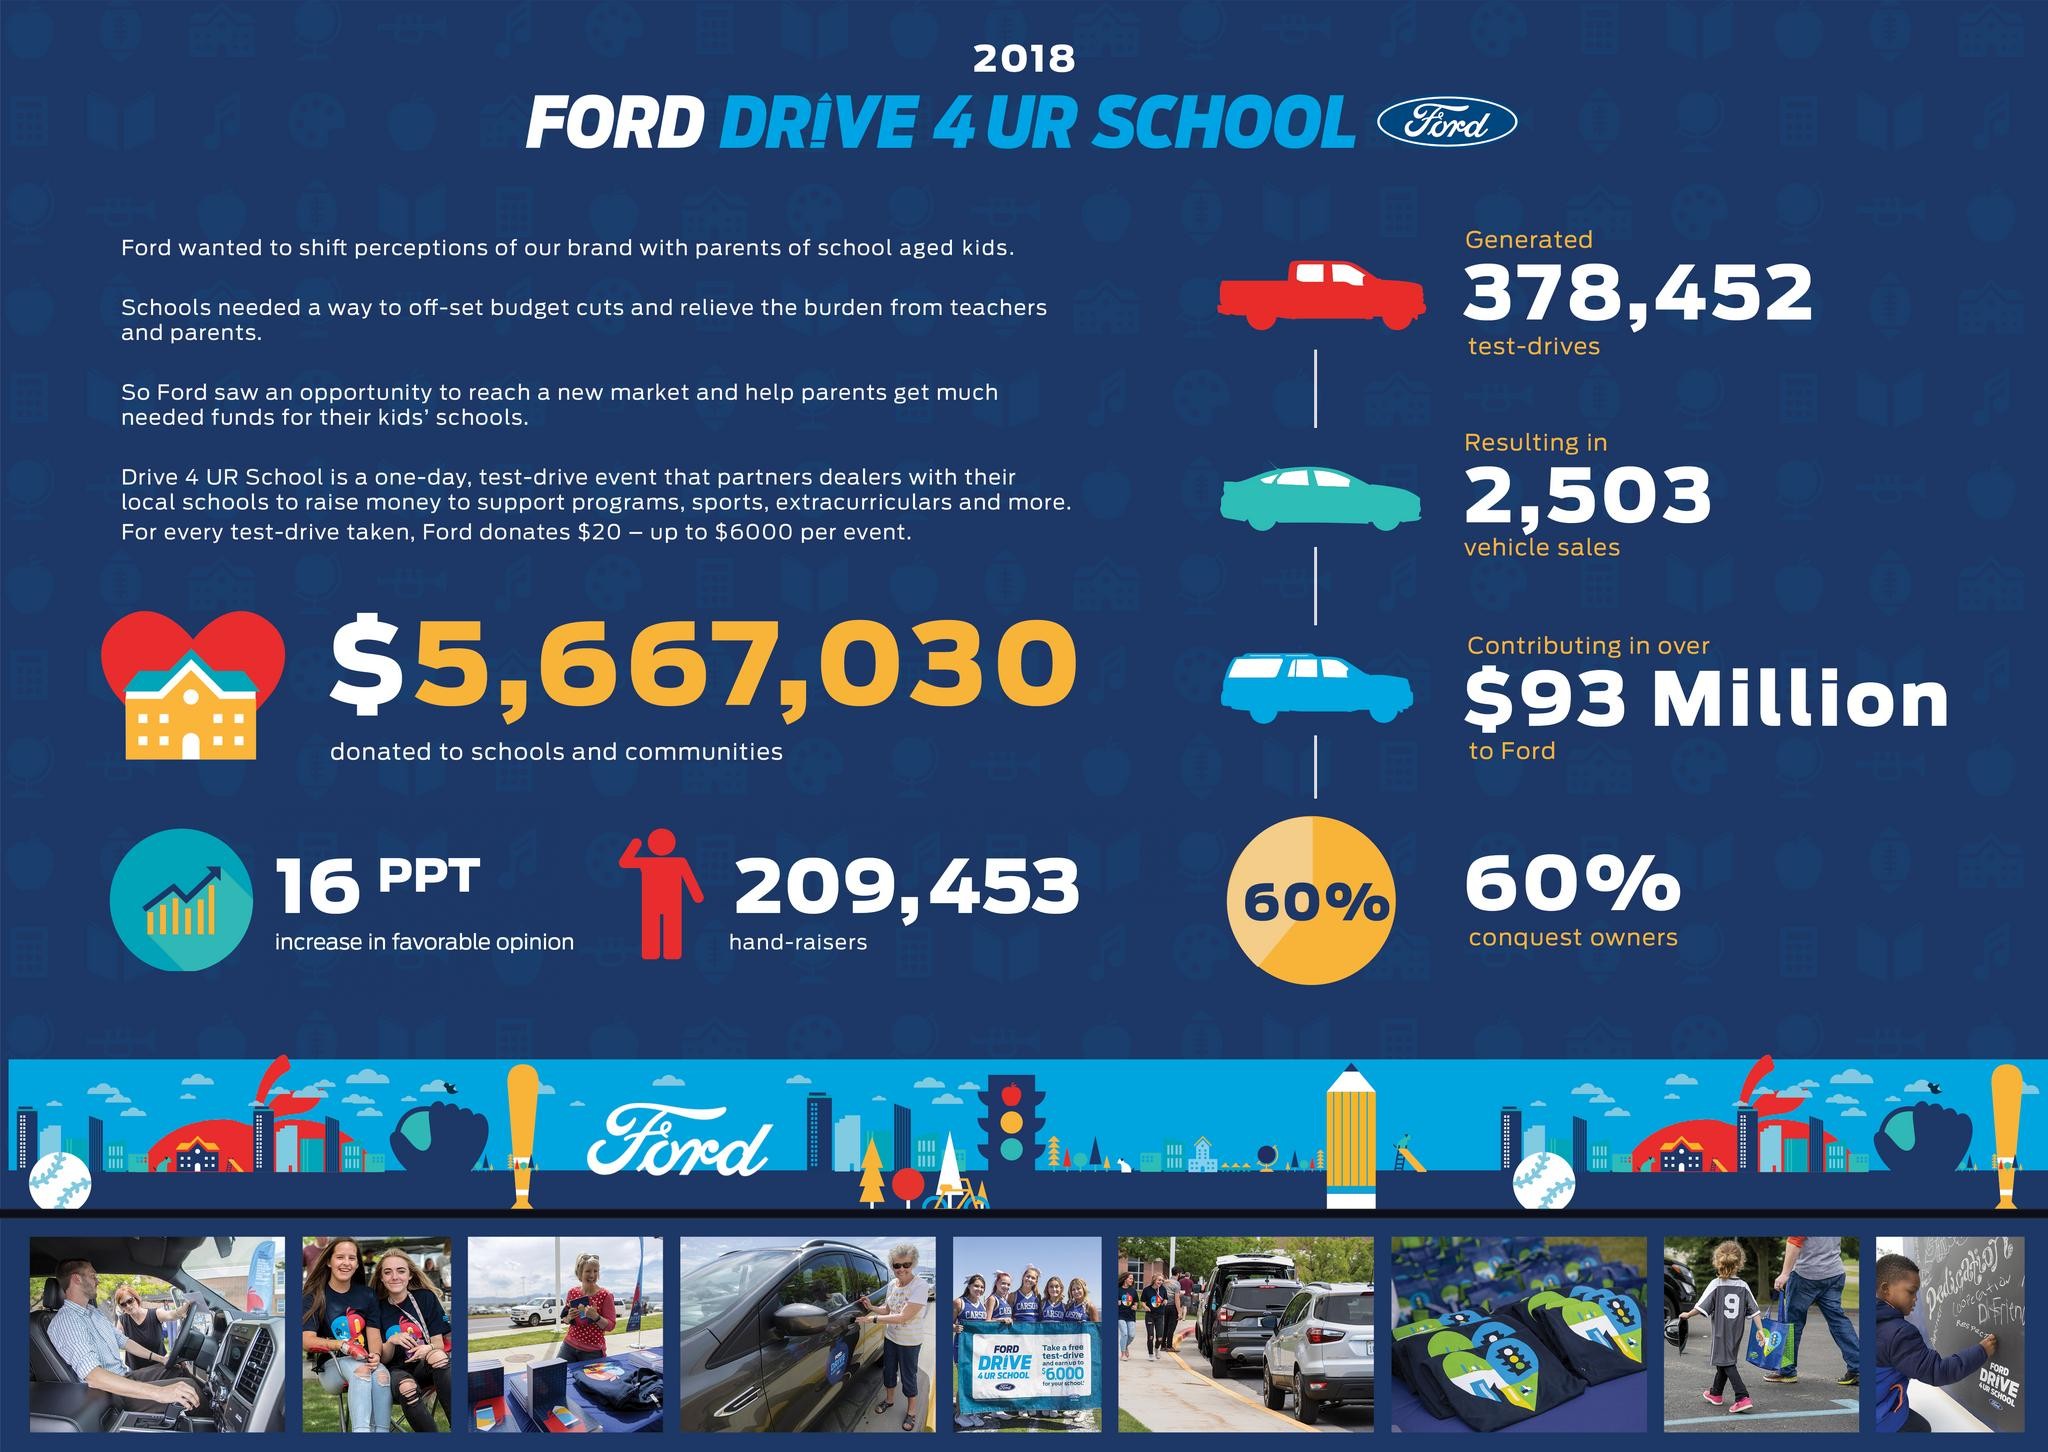 Ford Drive 4 UR School Program